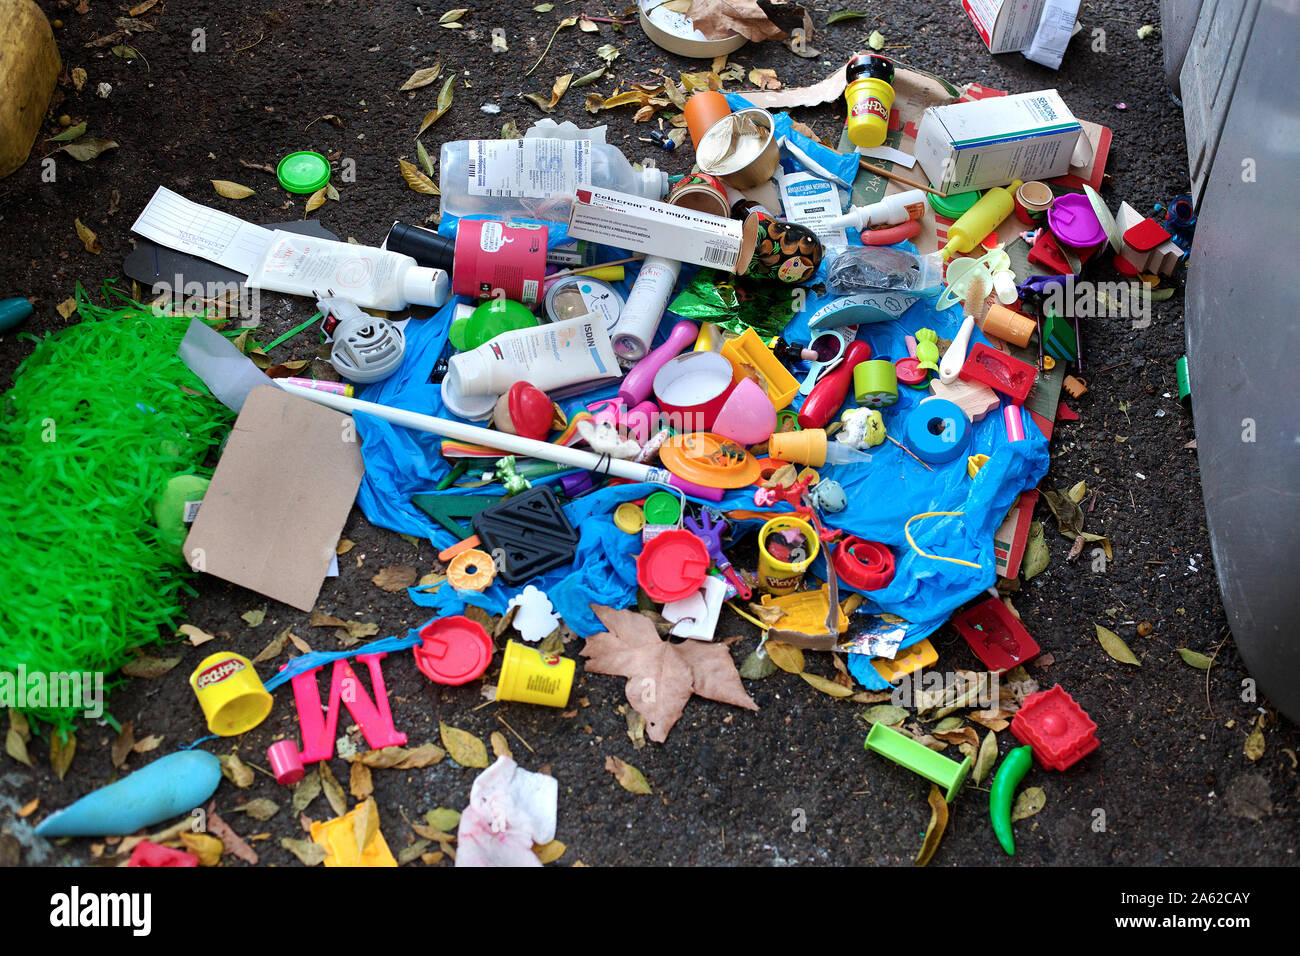 Rubbish in the street, Barcelona,Spain. Stock Photo